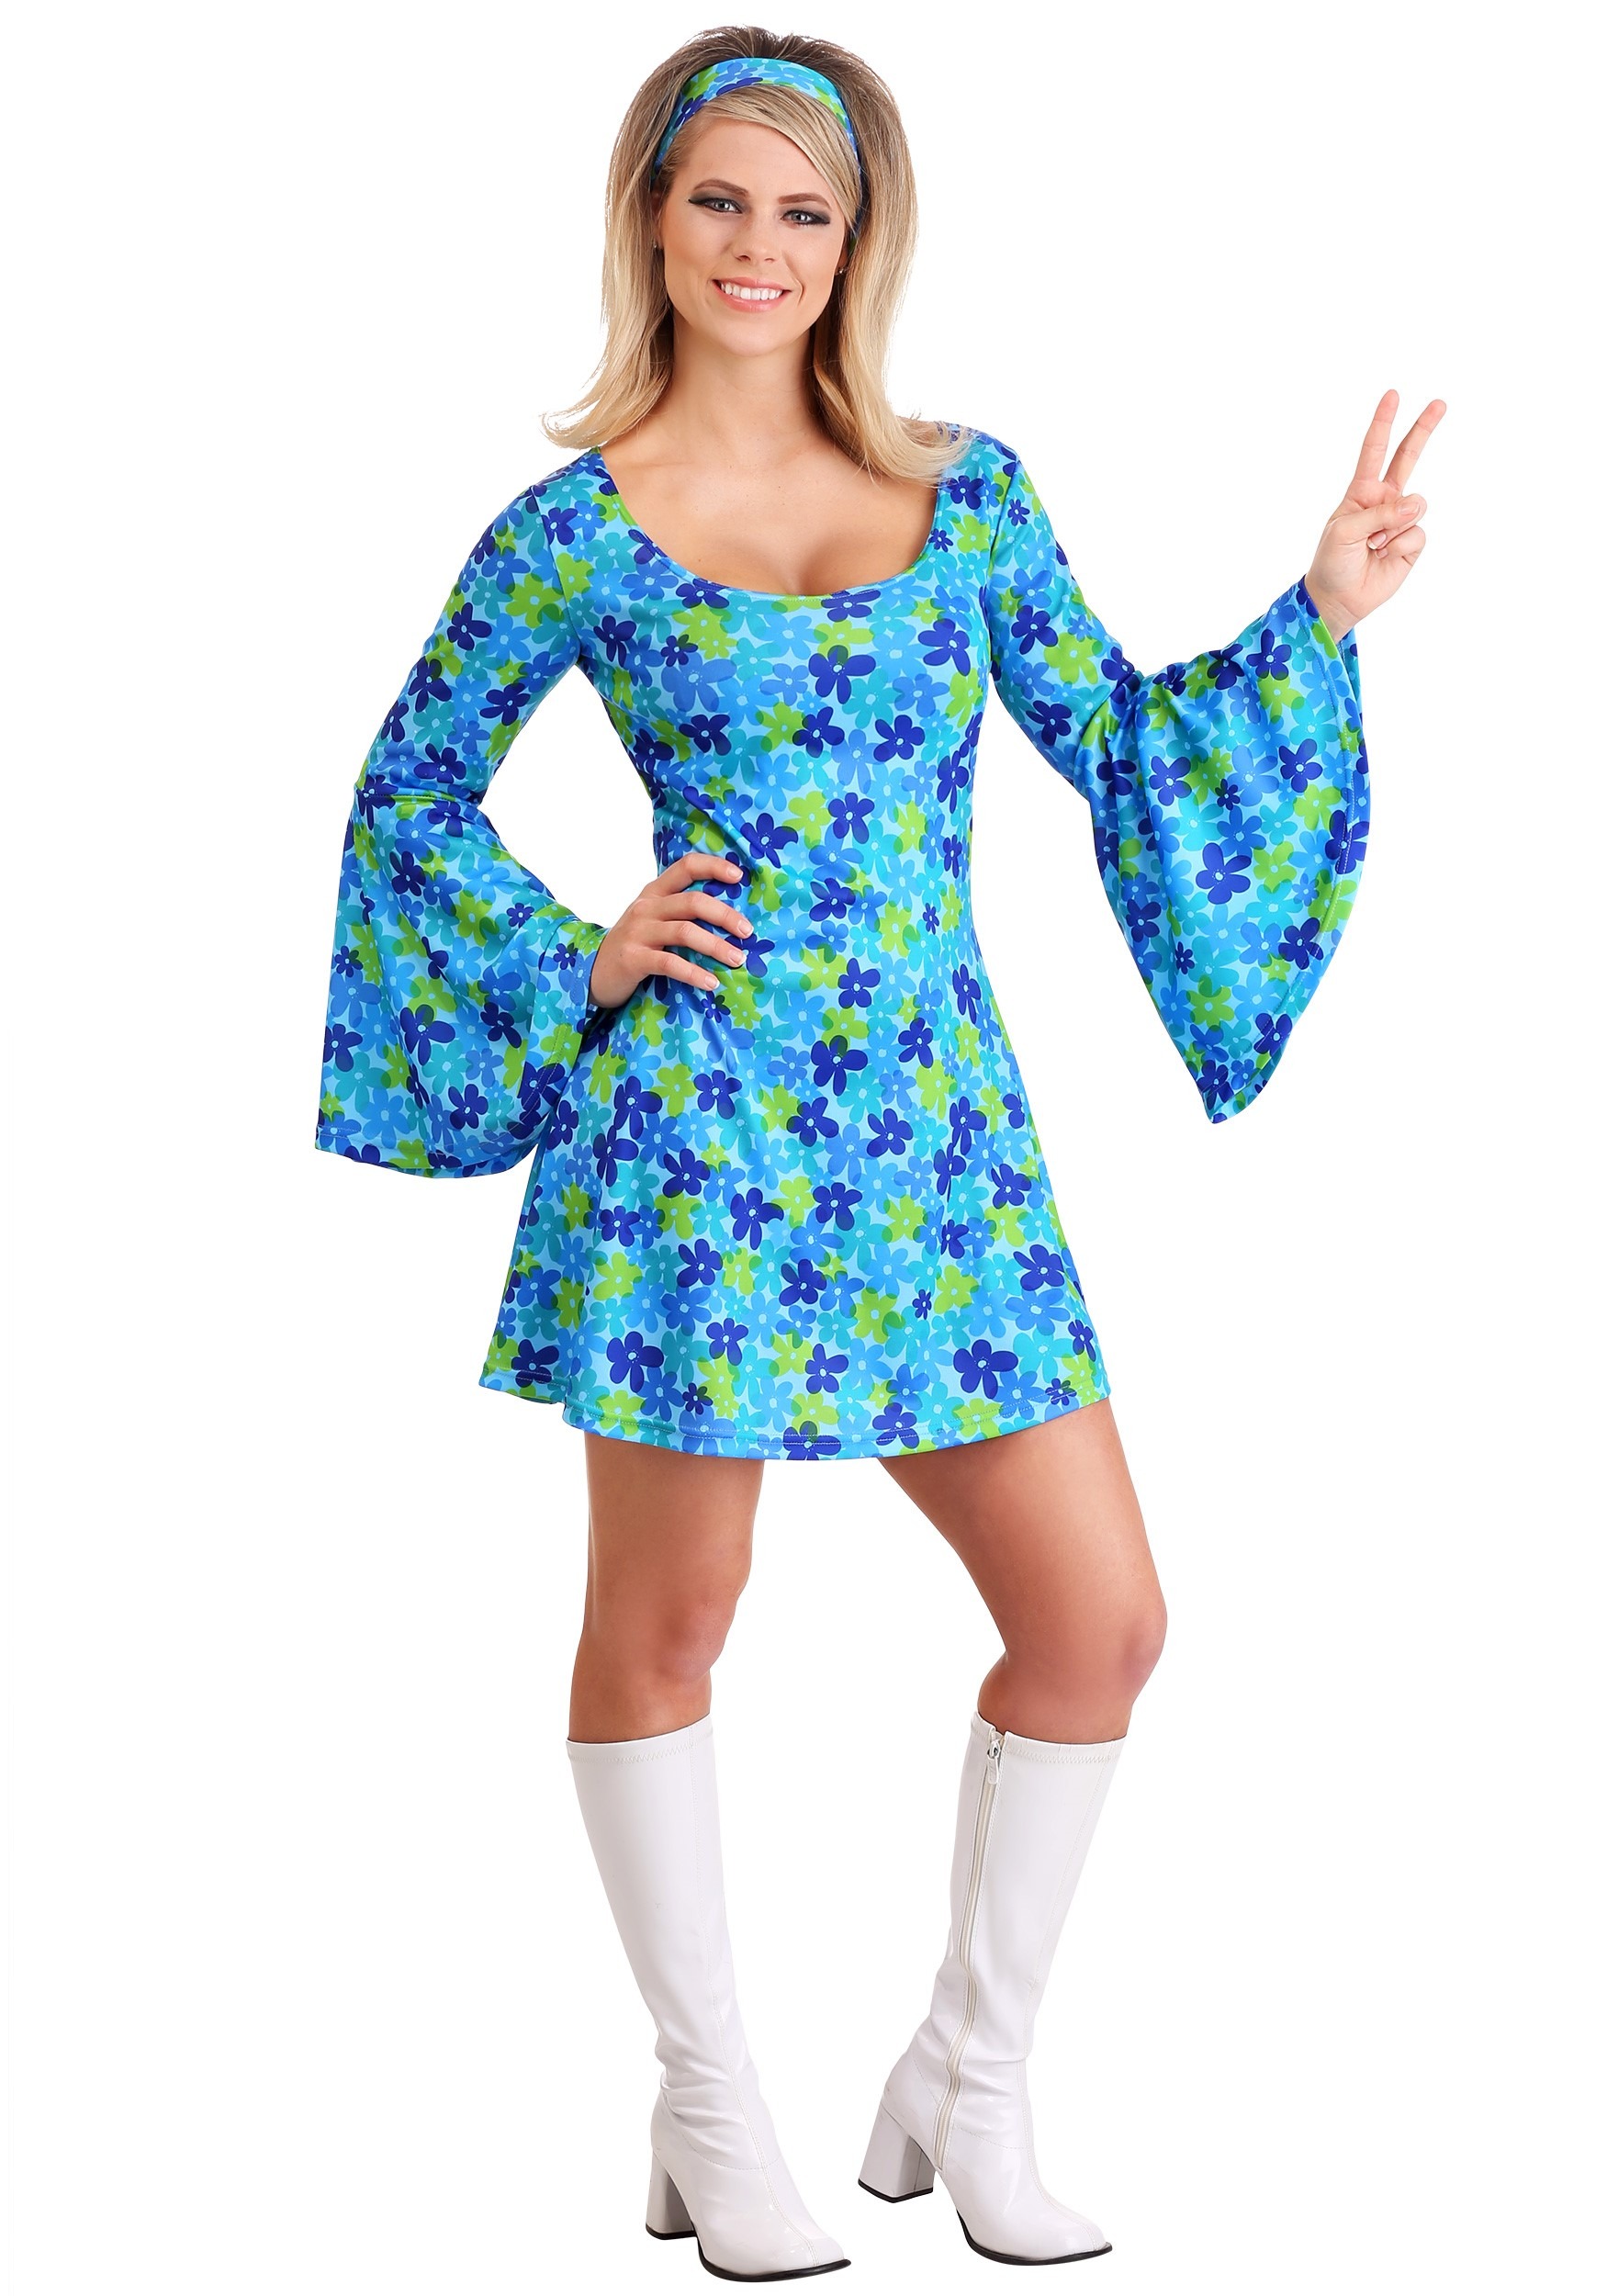 Wild Flower 70s Hippie Dress Costume for Women